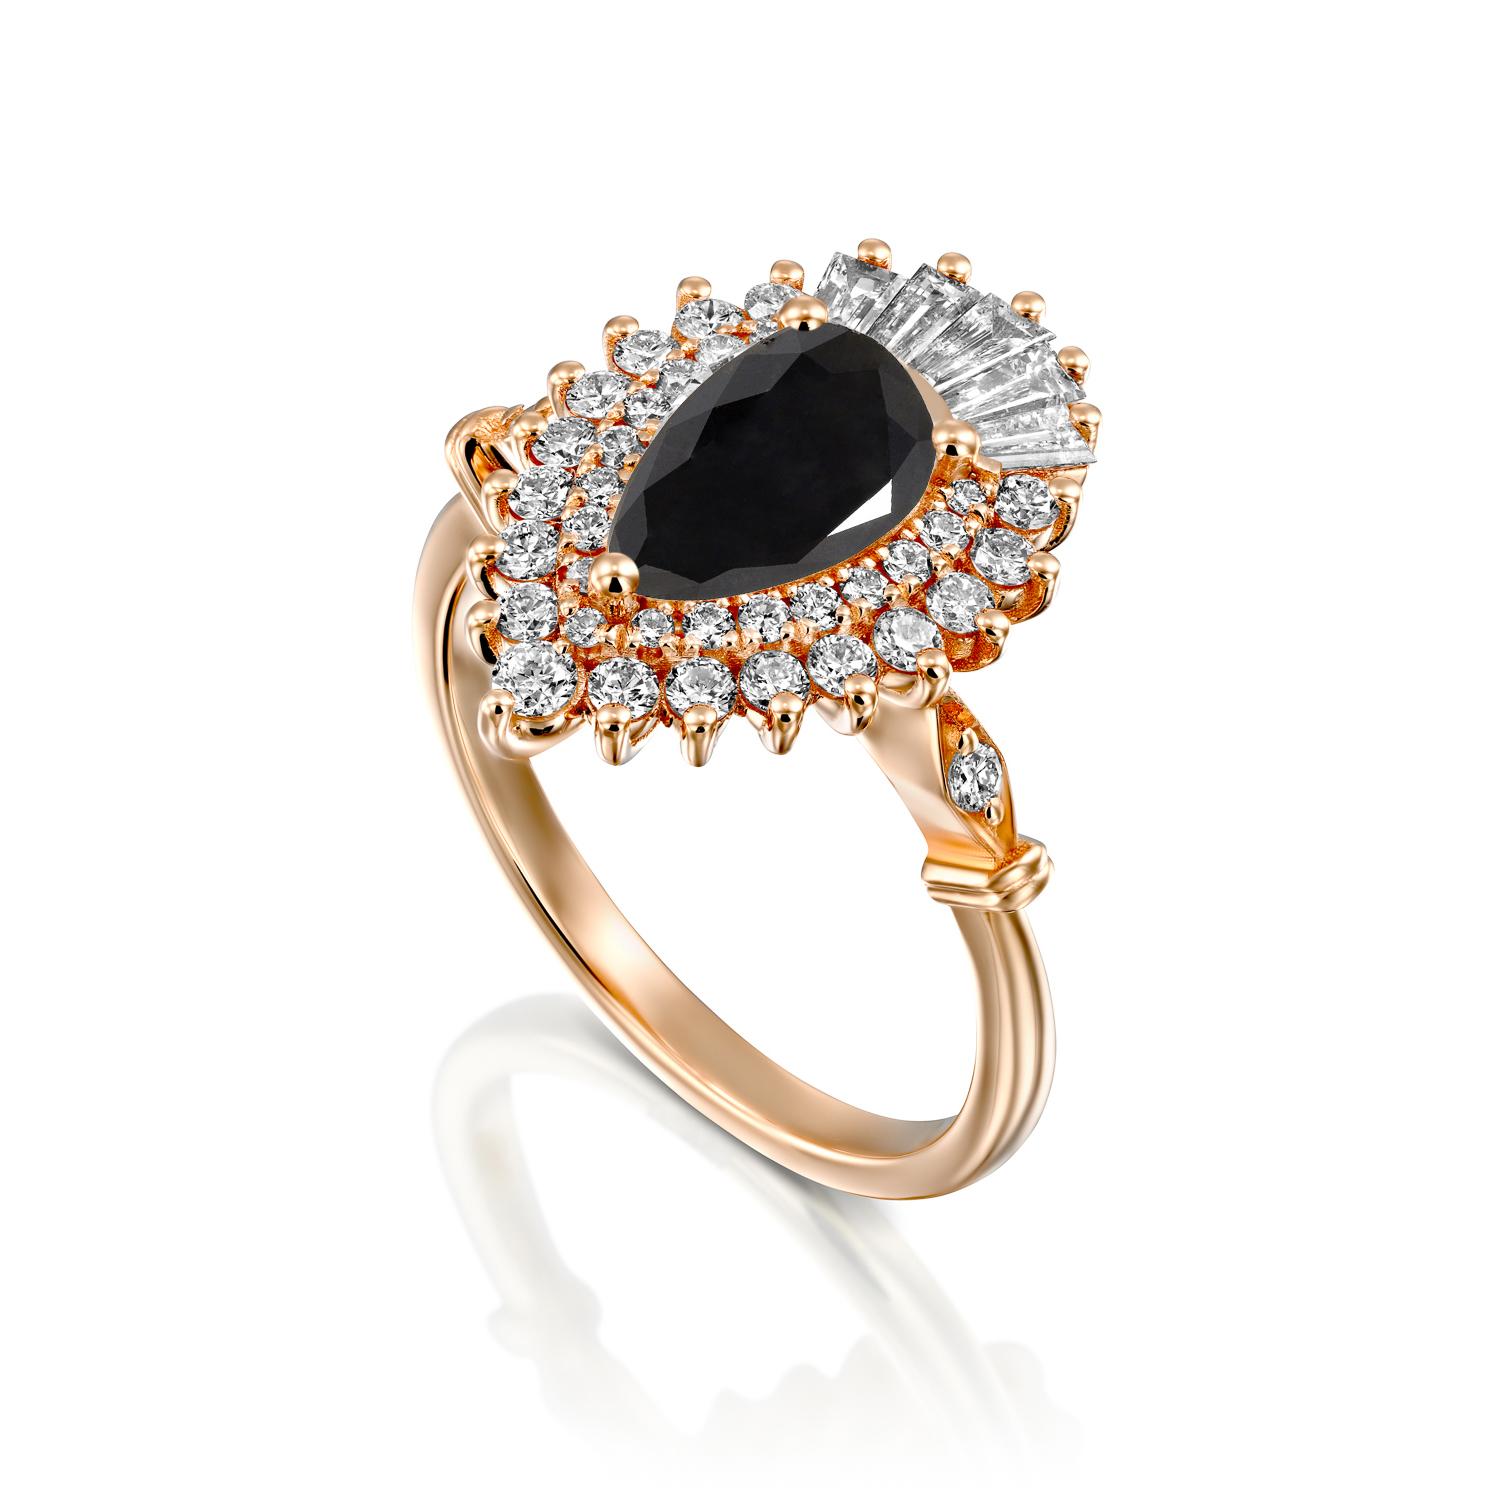 3 carat black diamond engagement ring